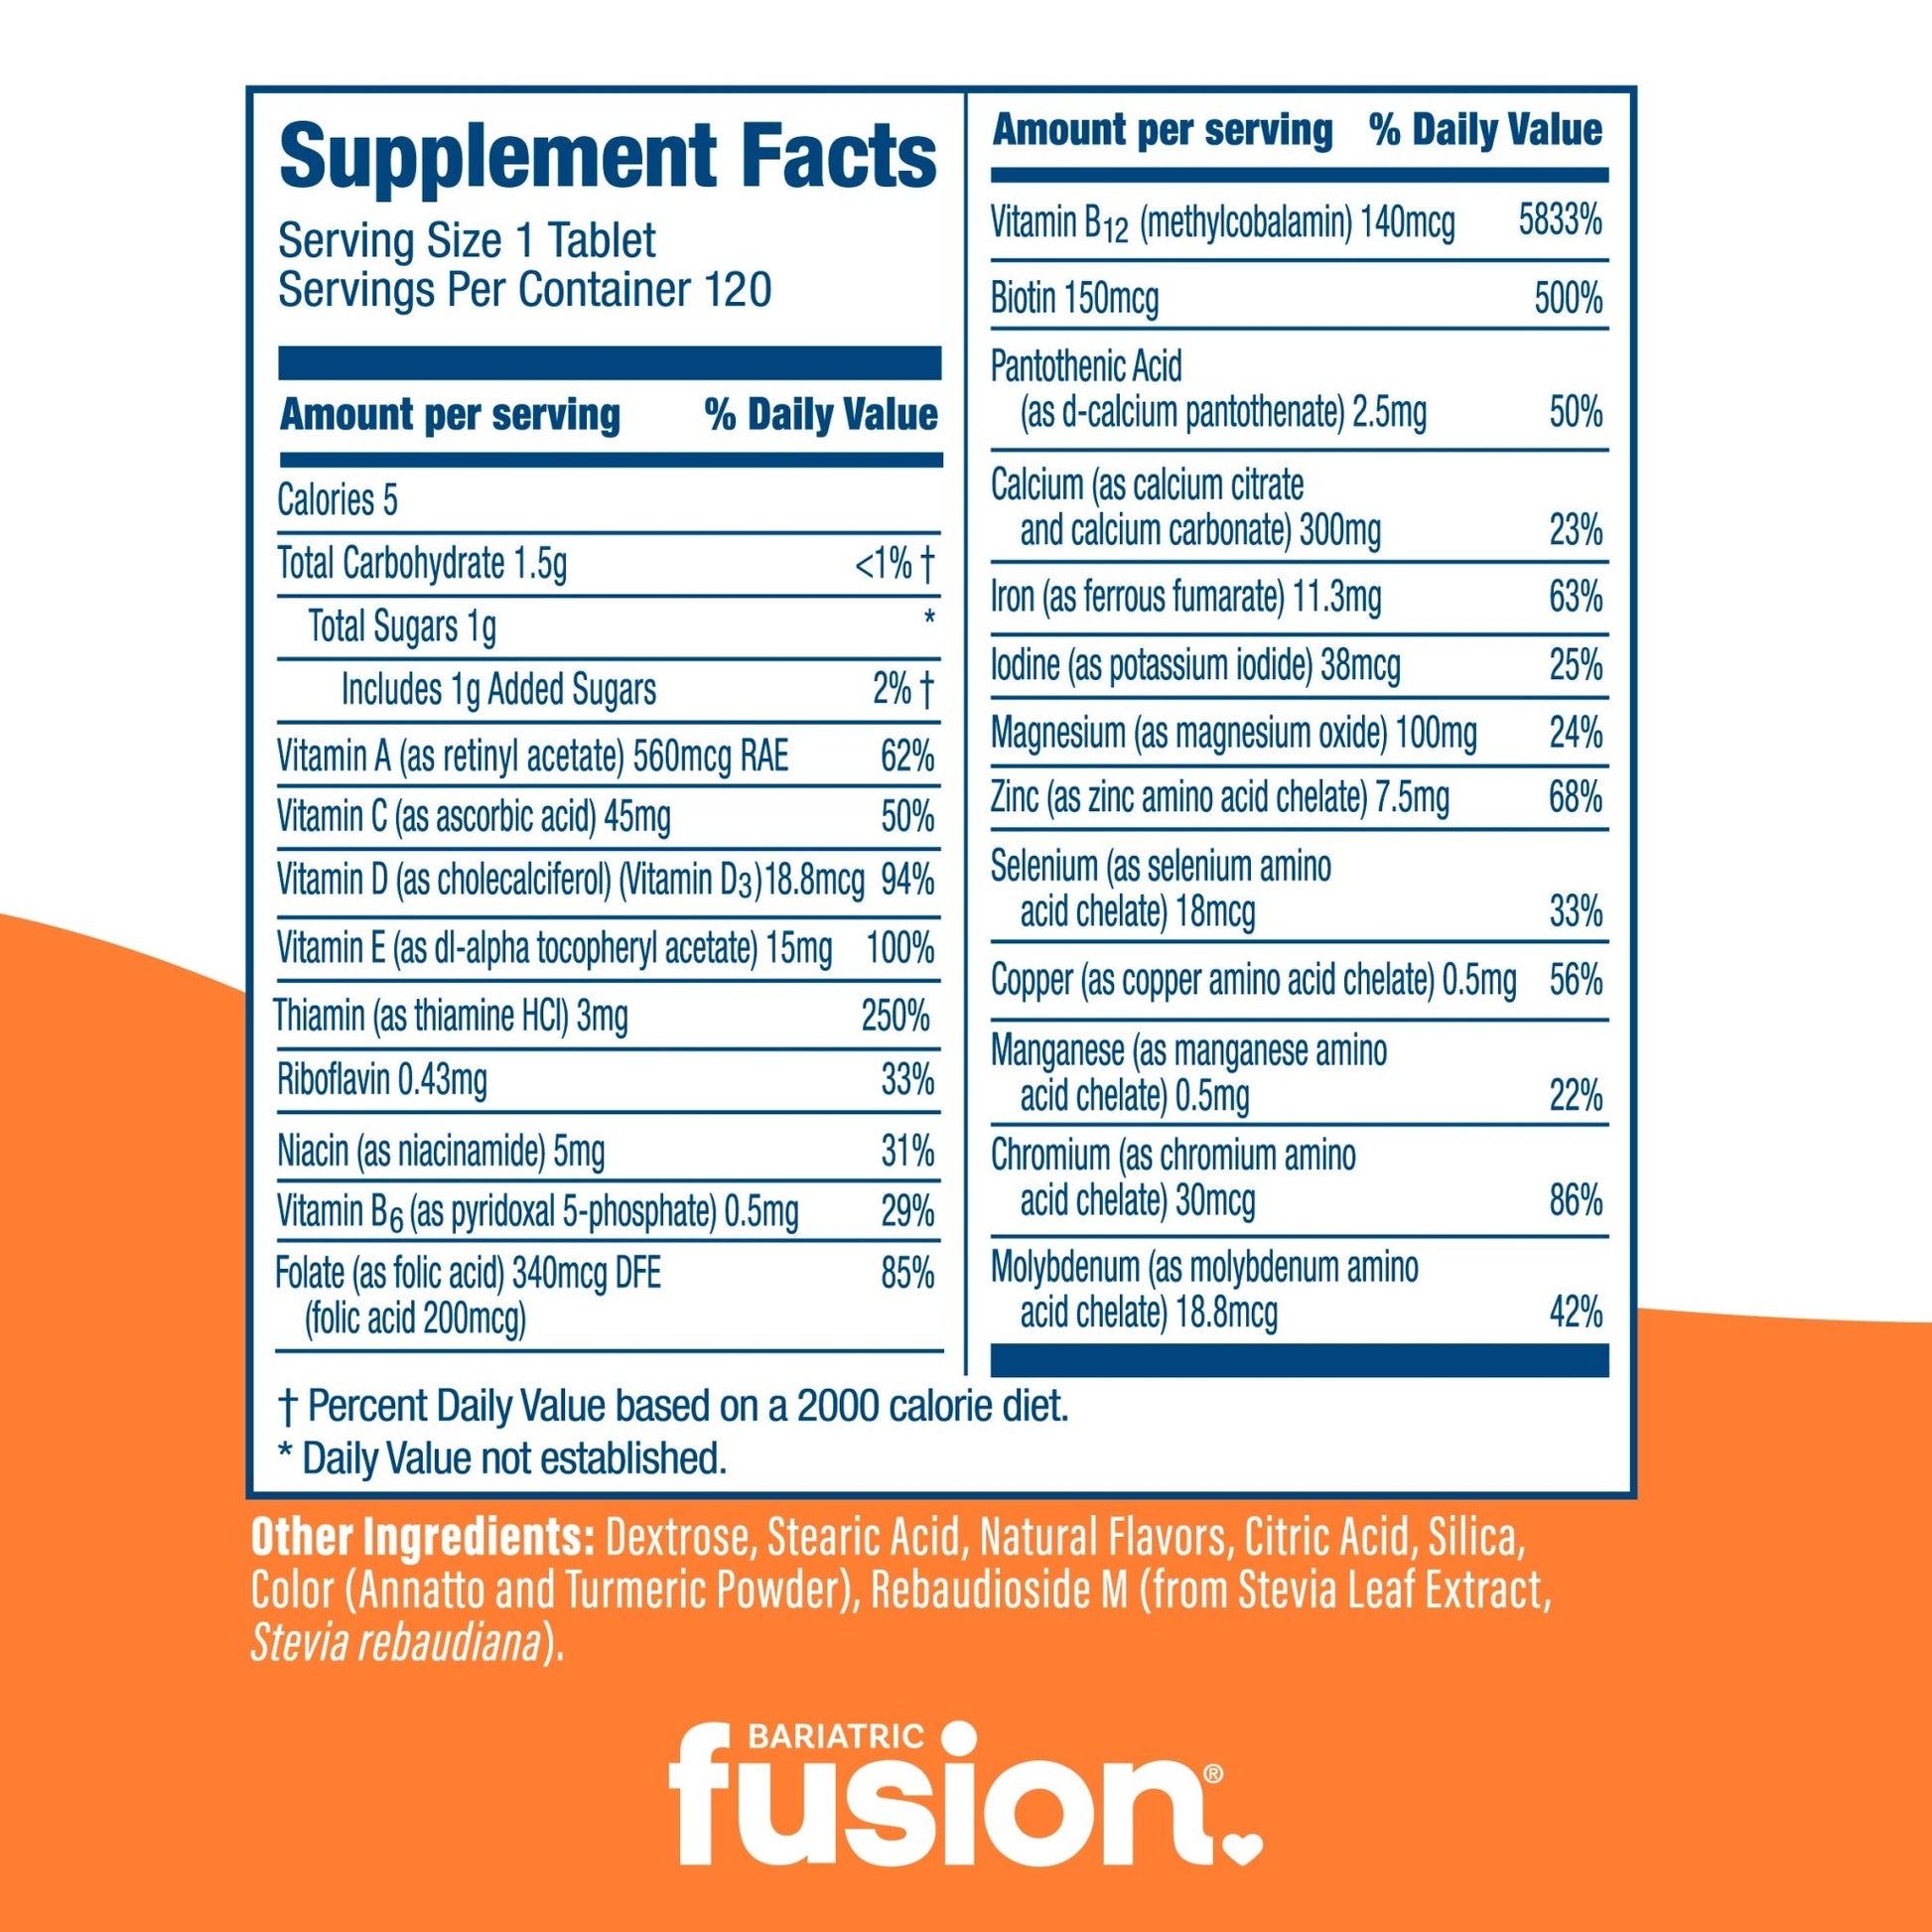 Bariatric Fusion Orange Cream Complete Chewable Bariatric Multivitamin supplement facts.